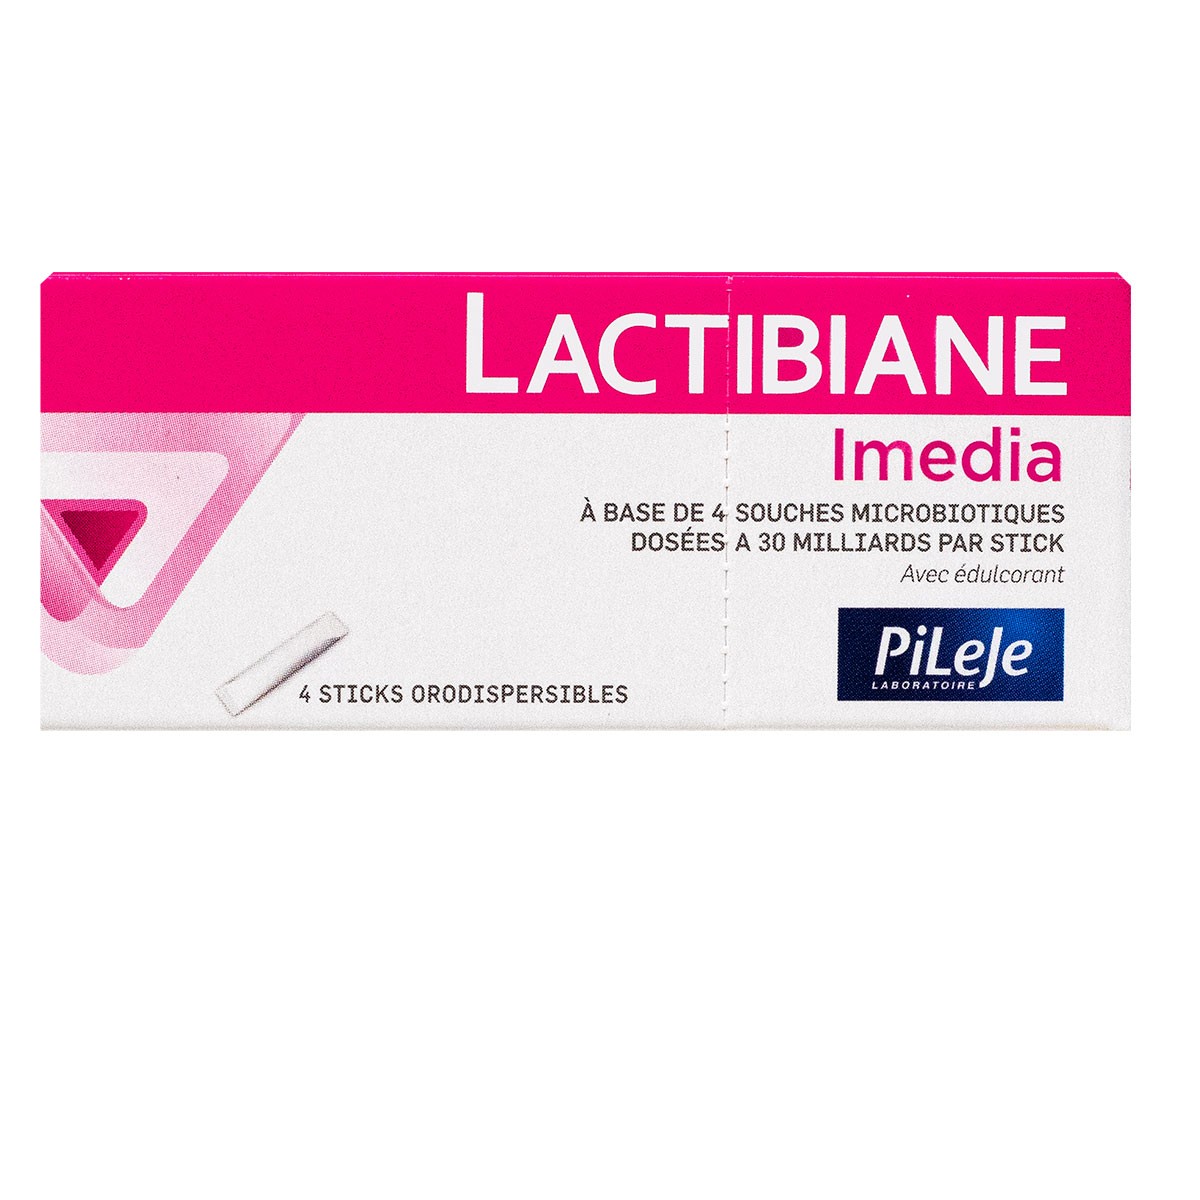 PiLeJe Lactibiane Tolérance - Pharmacie des Drakkars